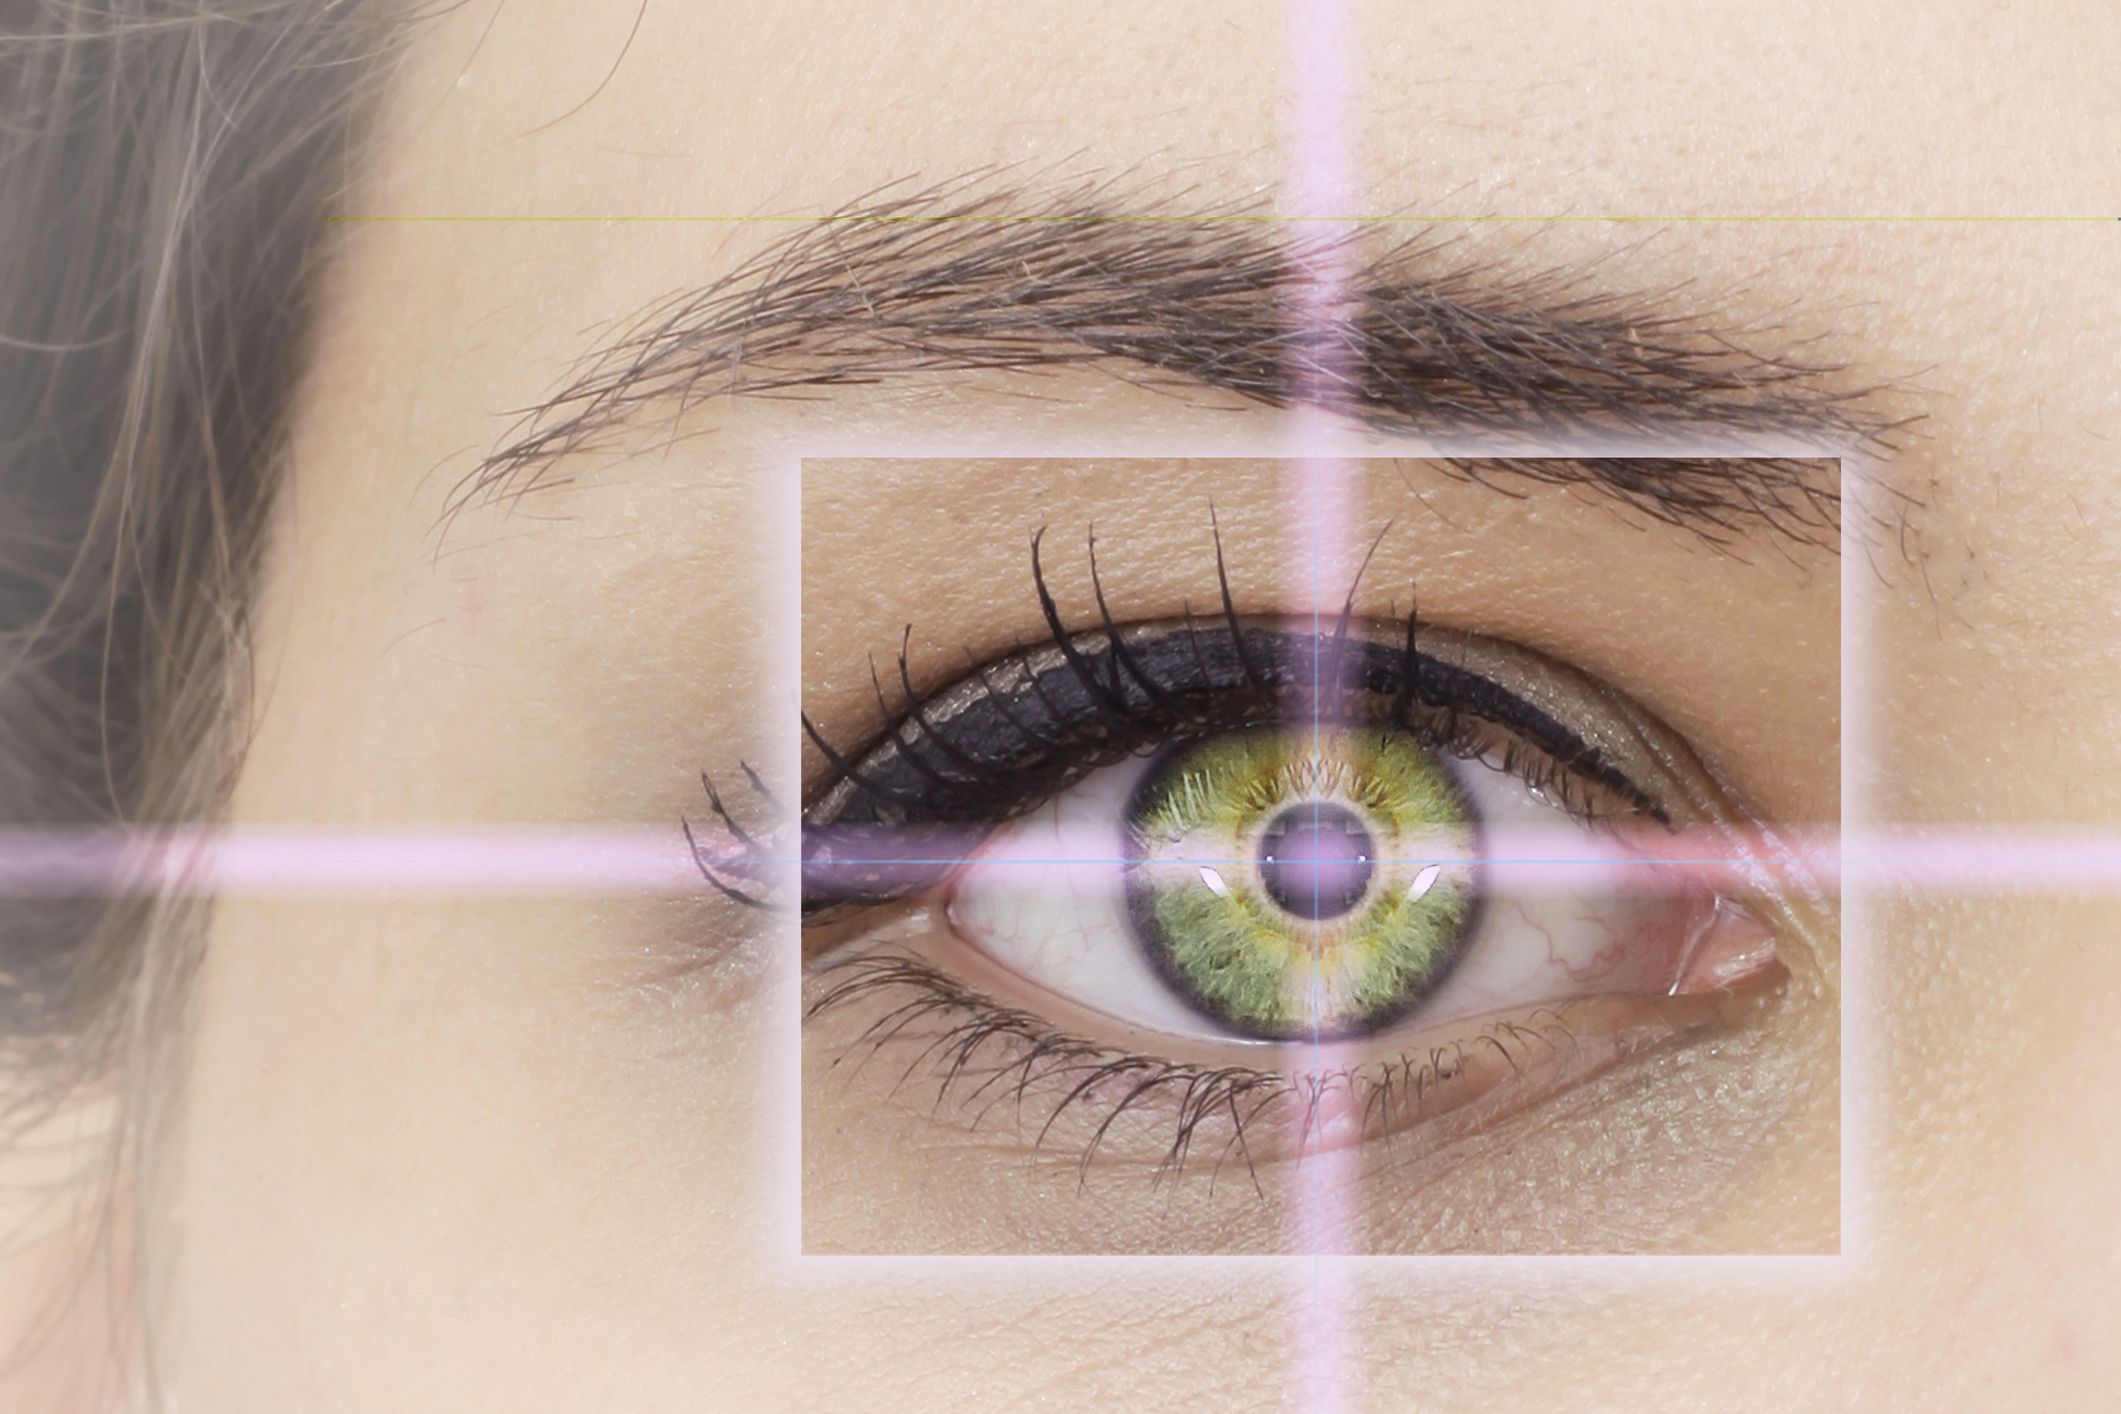 LASIK Laser Eye Surgery in Iran